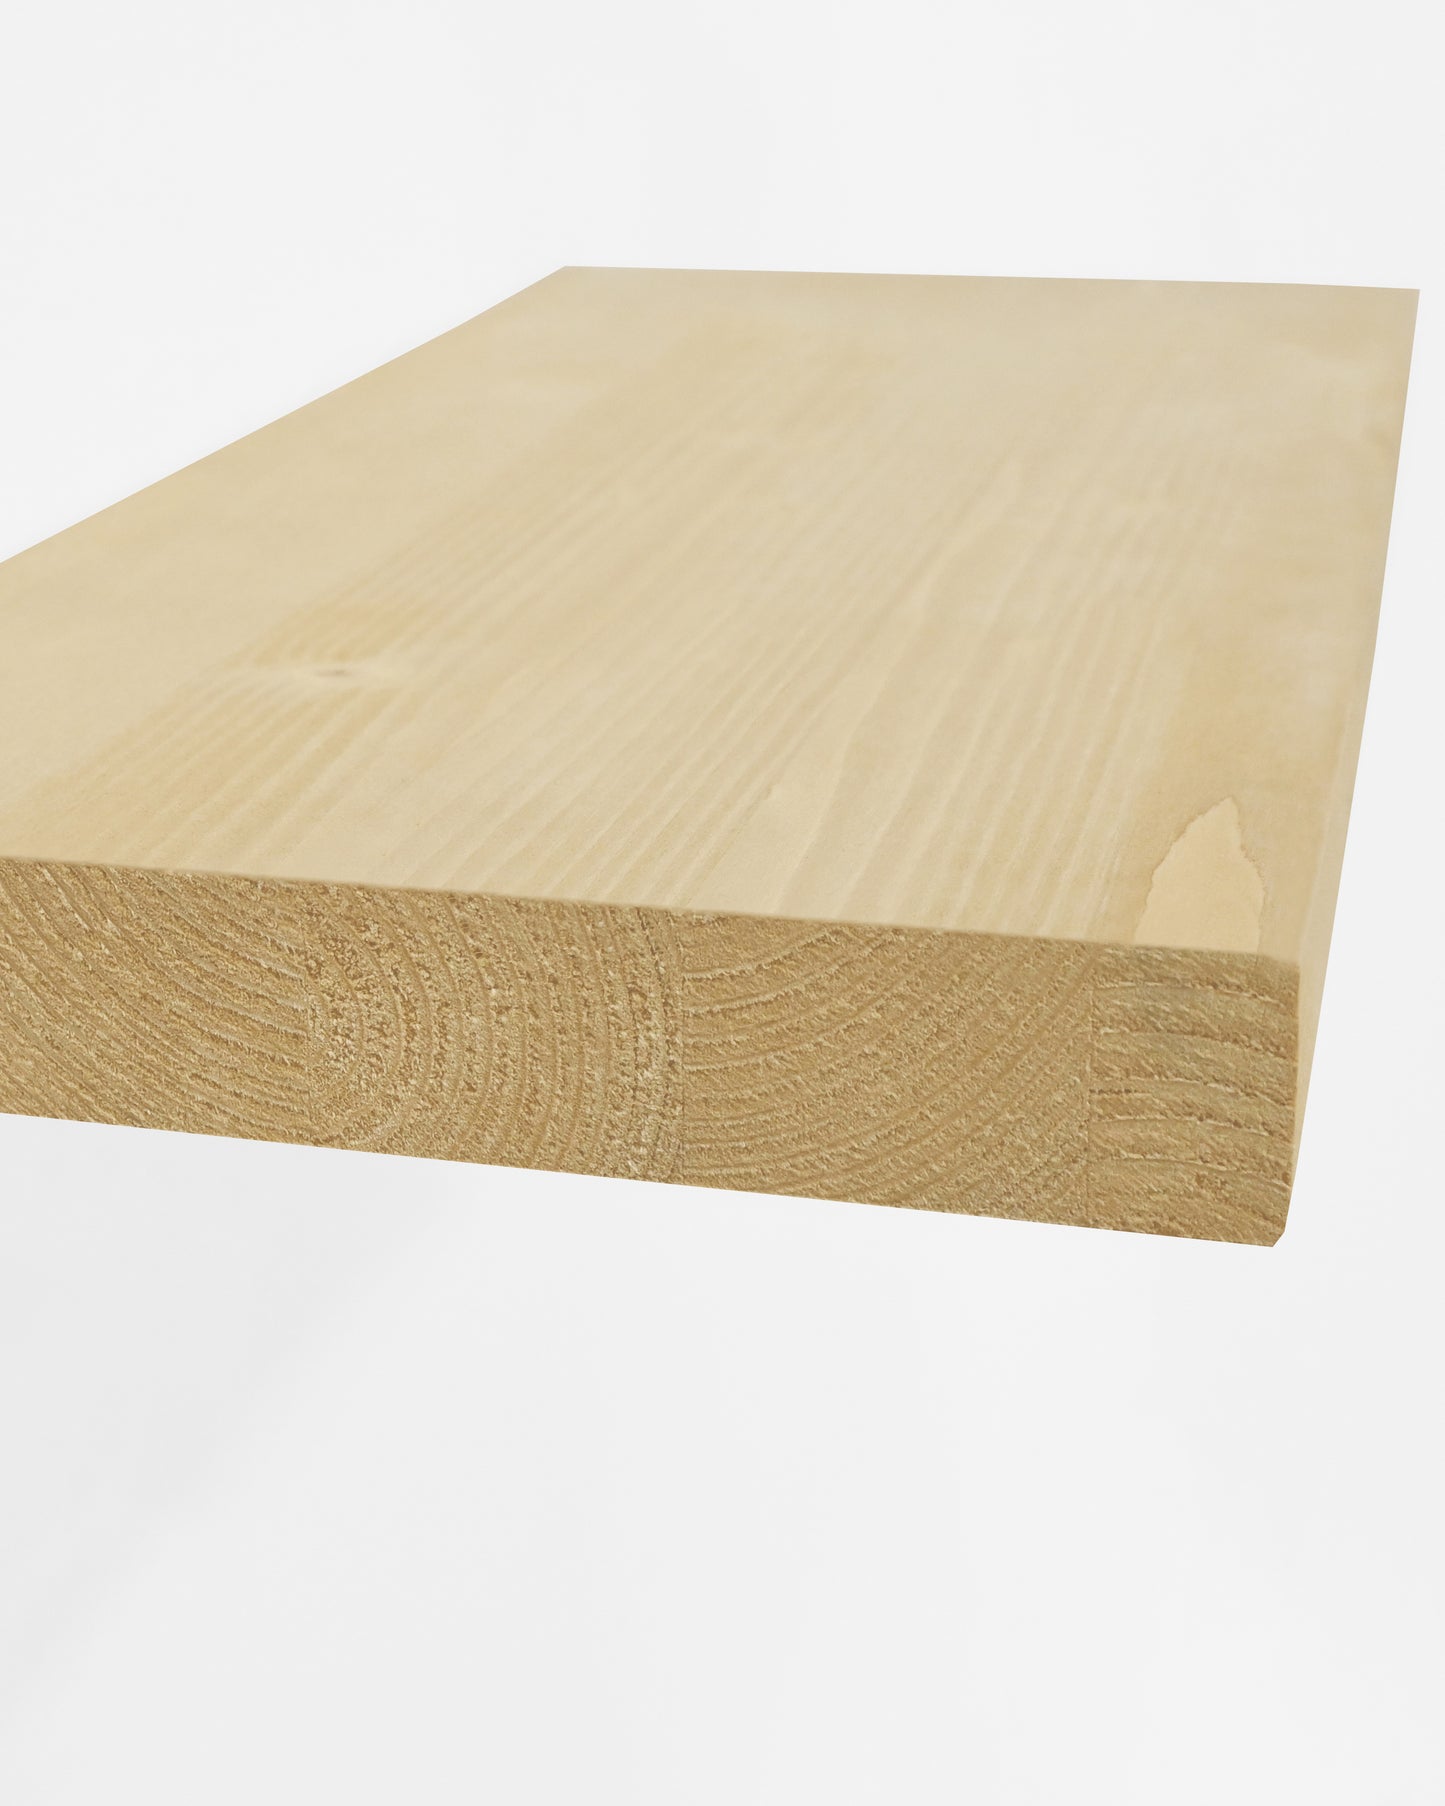 Mesita de noche de madera maciza flotante en tono olivo de 3,2x45cm - DECOWOOD